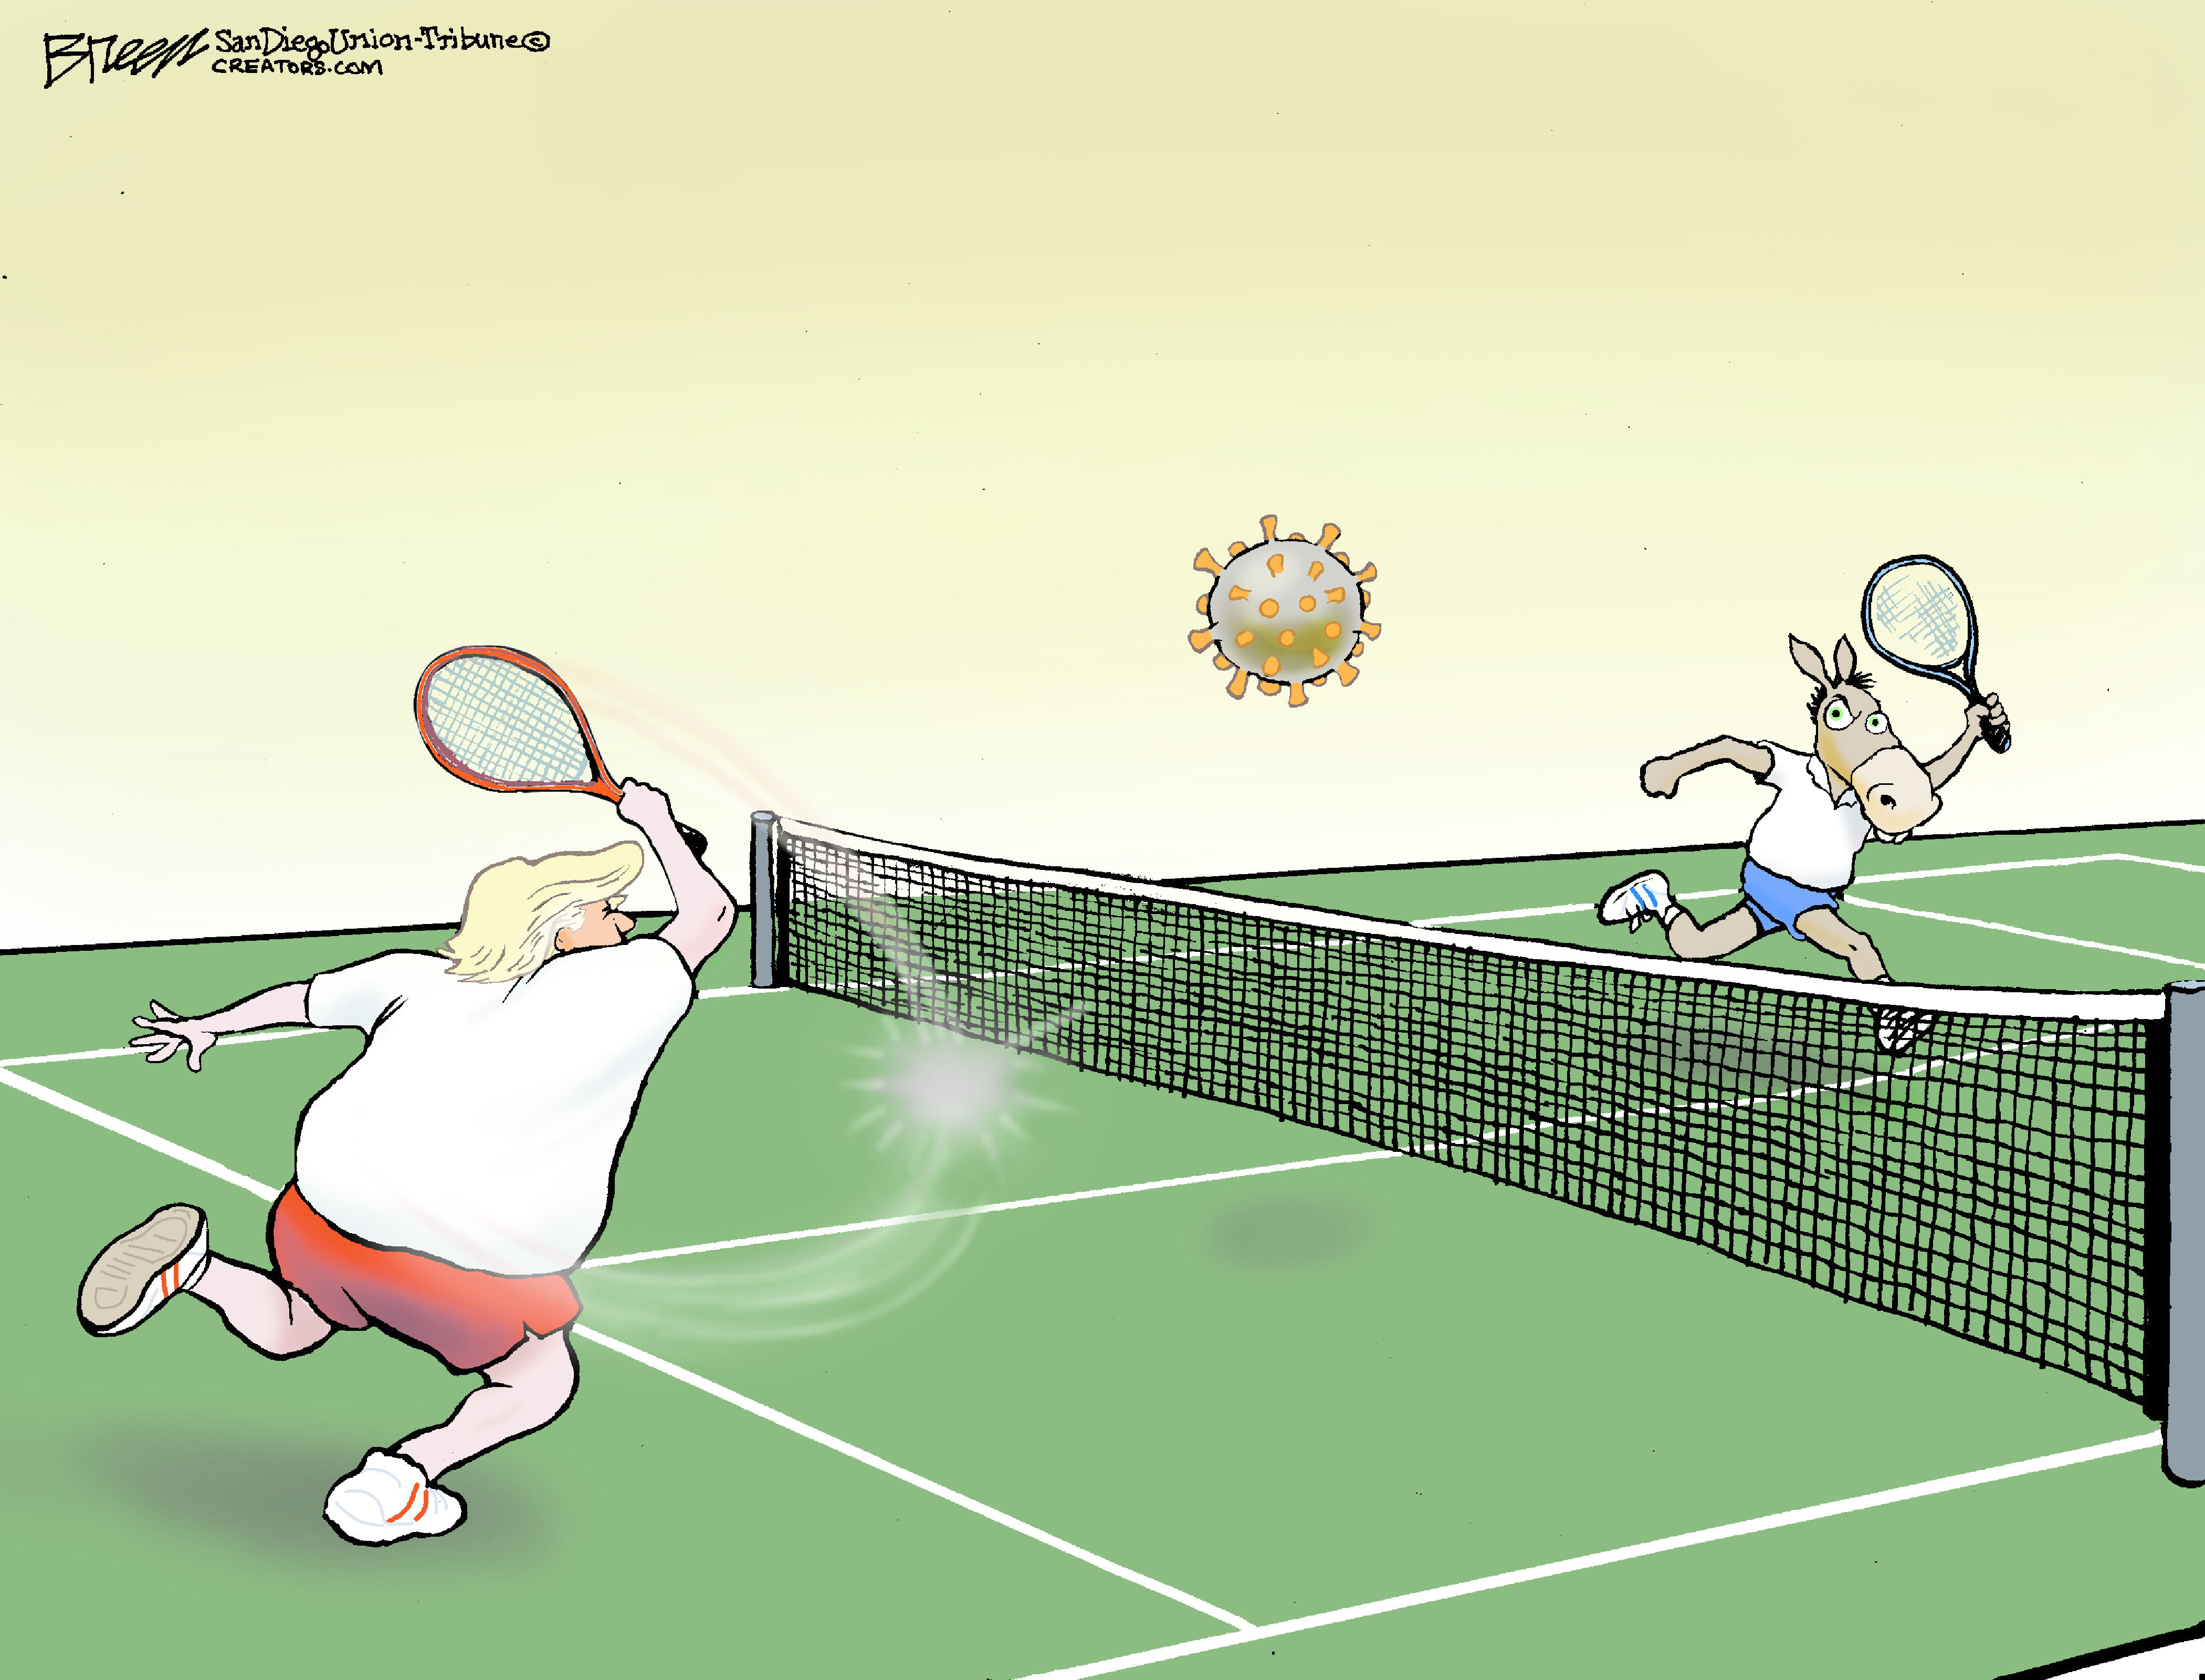 Political Cartoon . Trump dems play tennis bounce back coronavirus blame